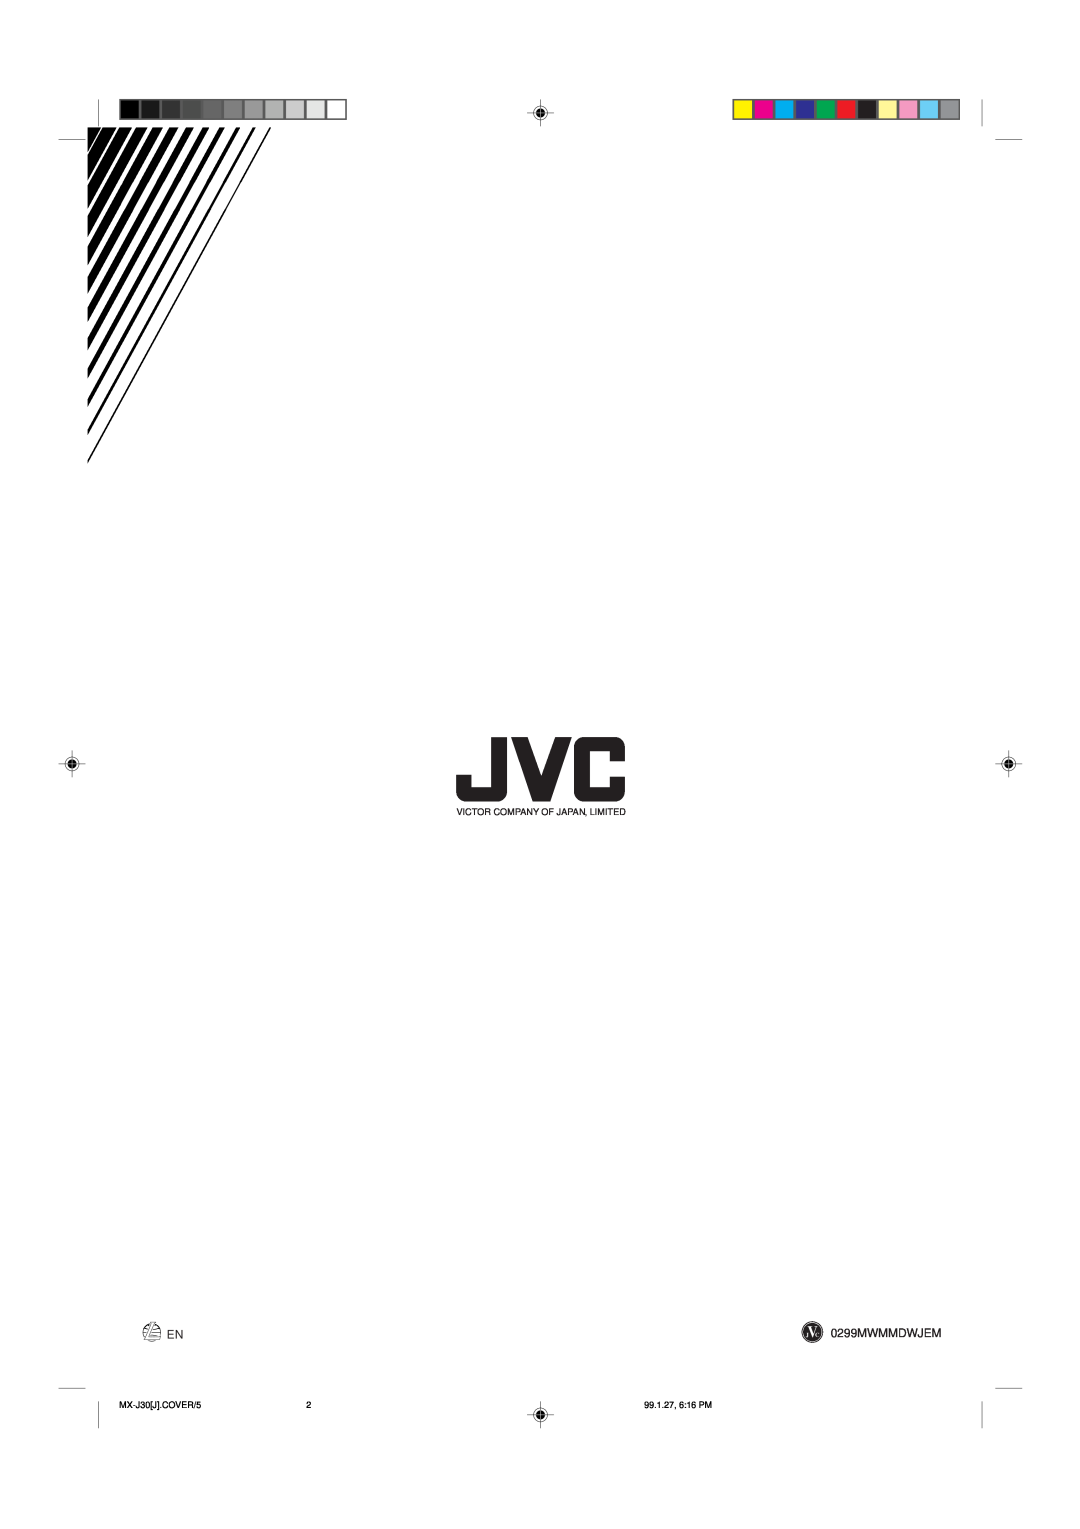 JVC manual 0299MWMMDWJEM, Victor Company Of Japan, Limited, MX-J30J.COVER/5, 99.1.27, 616 PM 